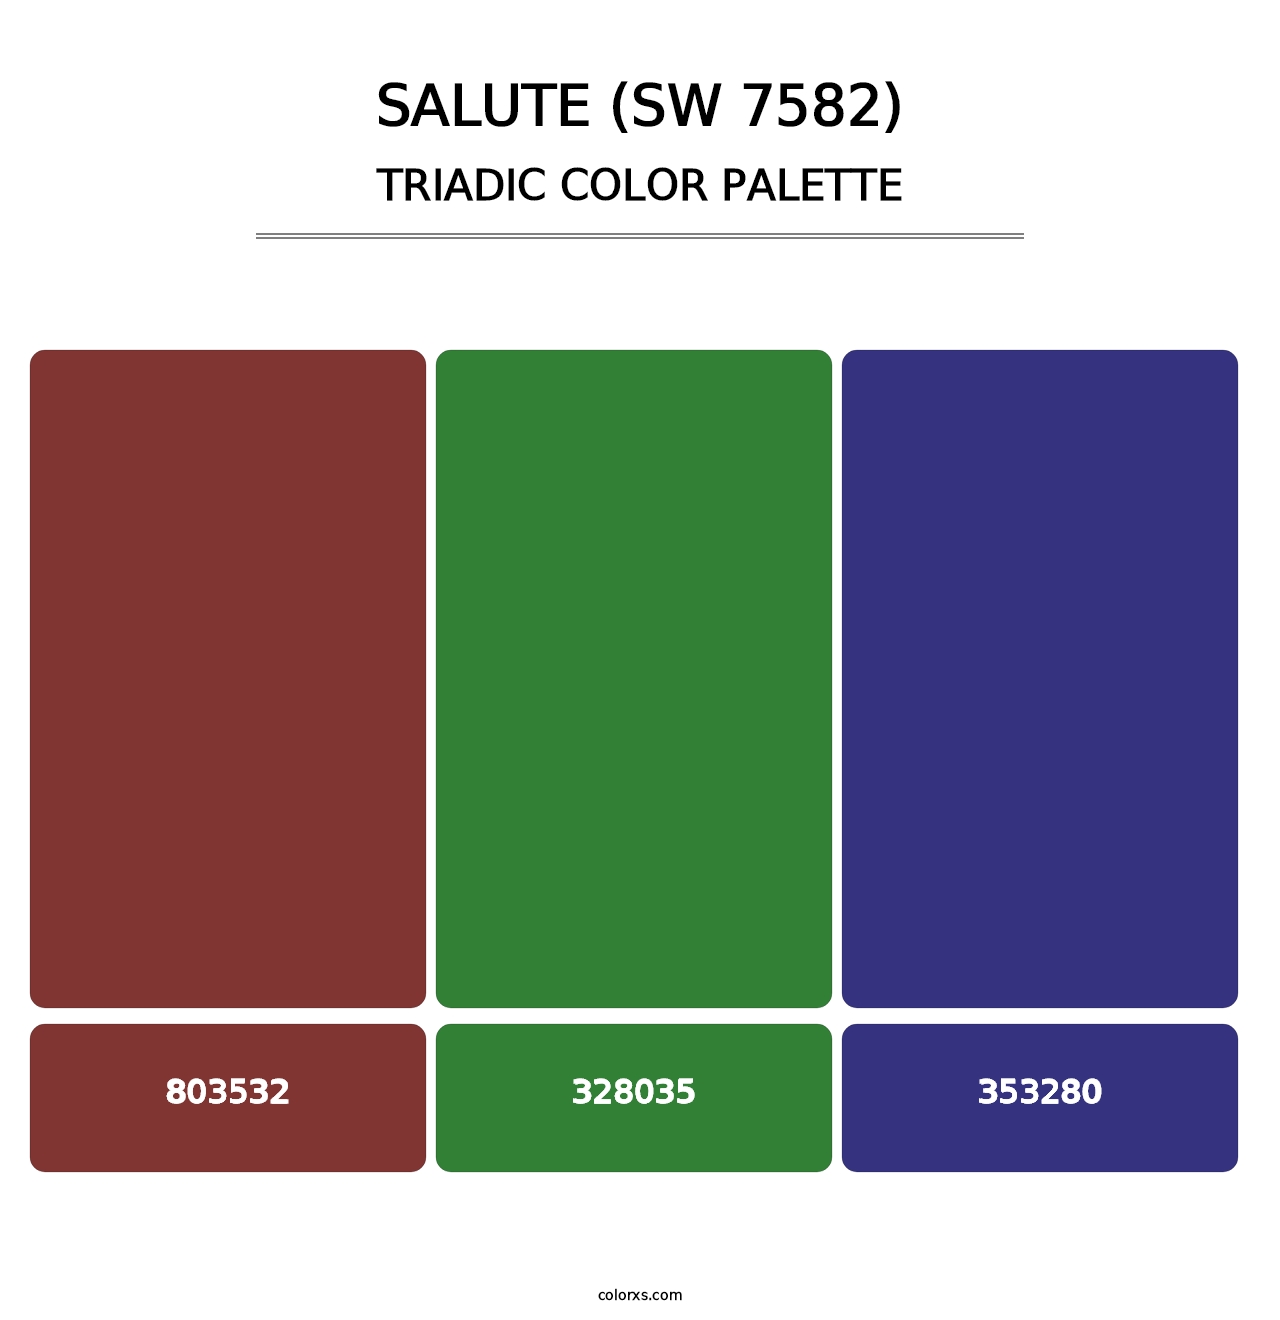 Salute (SW 7582) - Triadic Color Palette